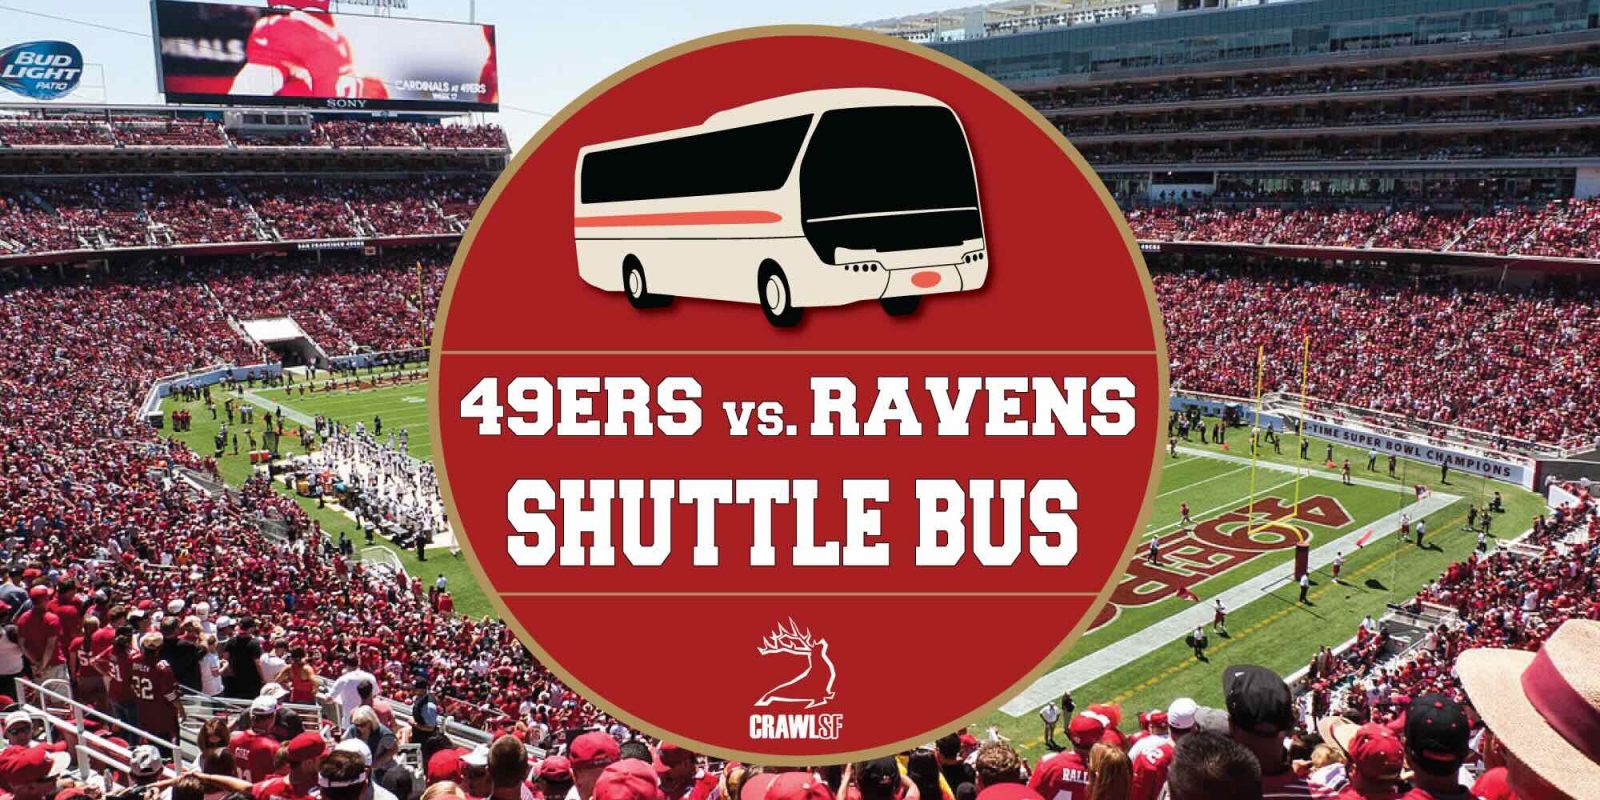 Shuttle Bus to Levi's Stadium: 49ers vs. Ravens